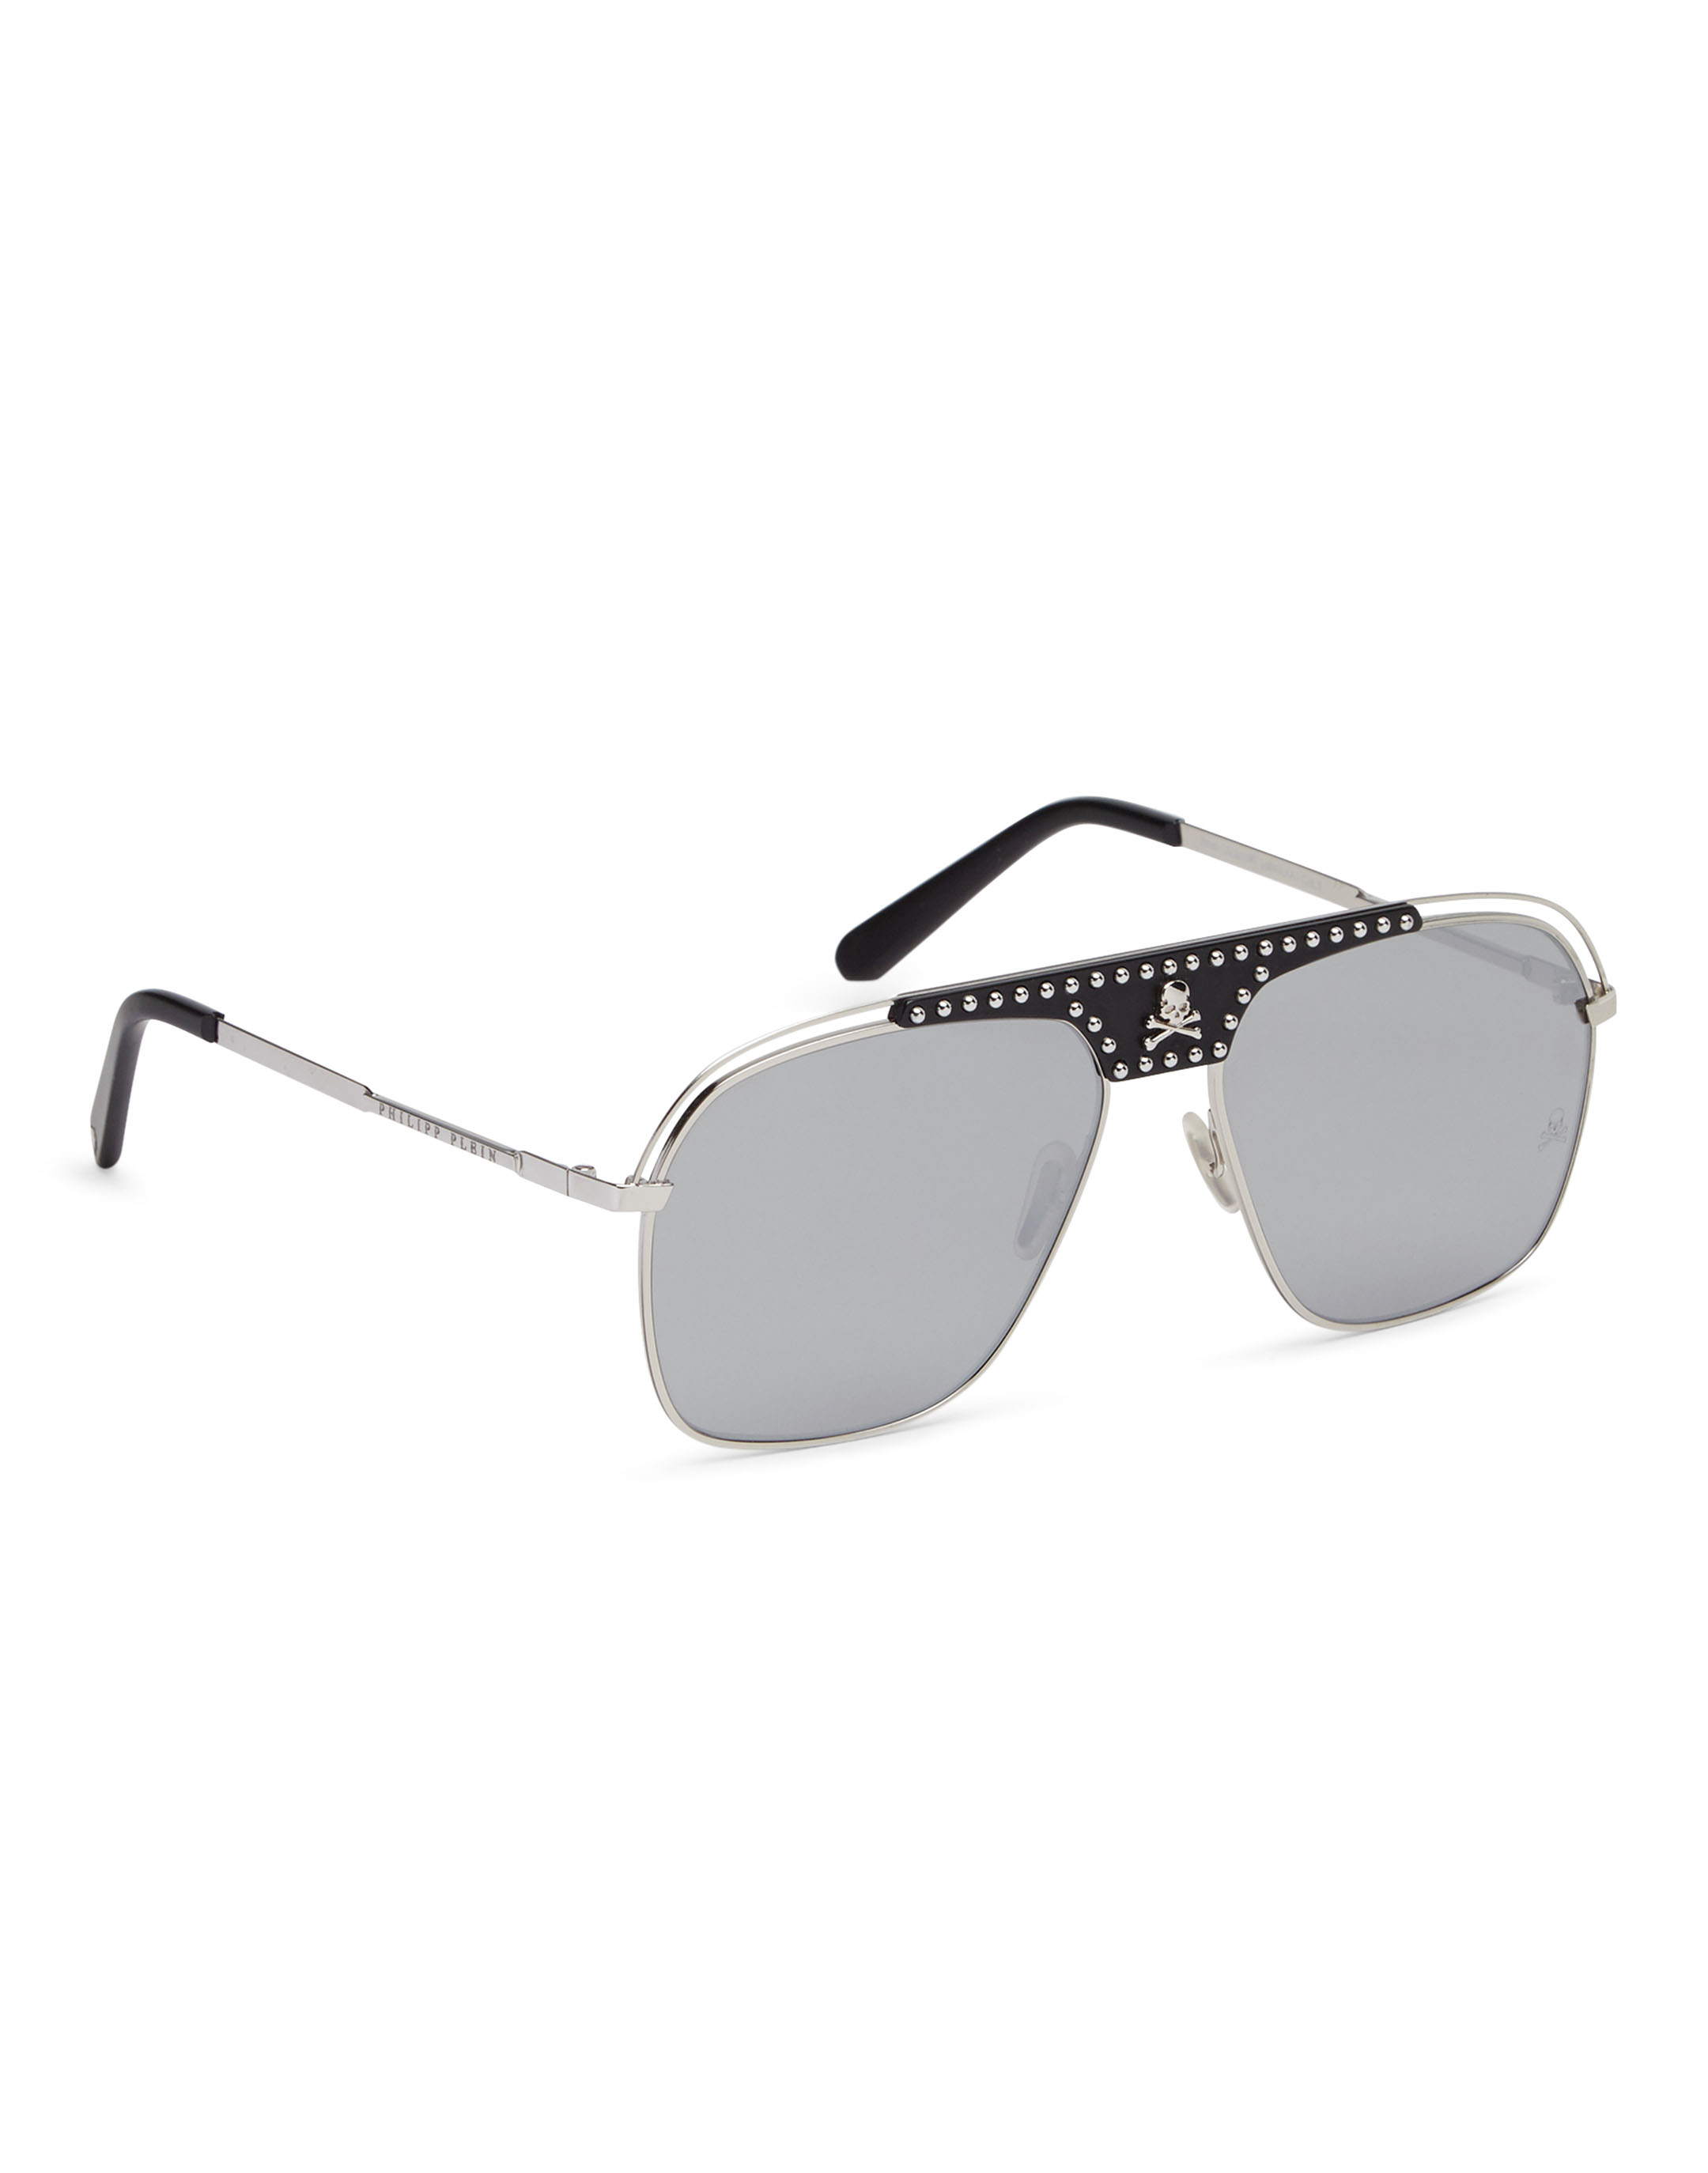 Sunglasses Noah Studded | Philipp Plein Outlet